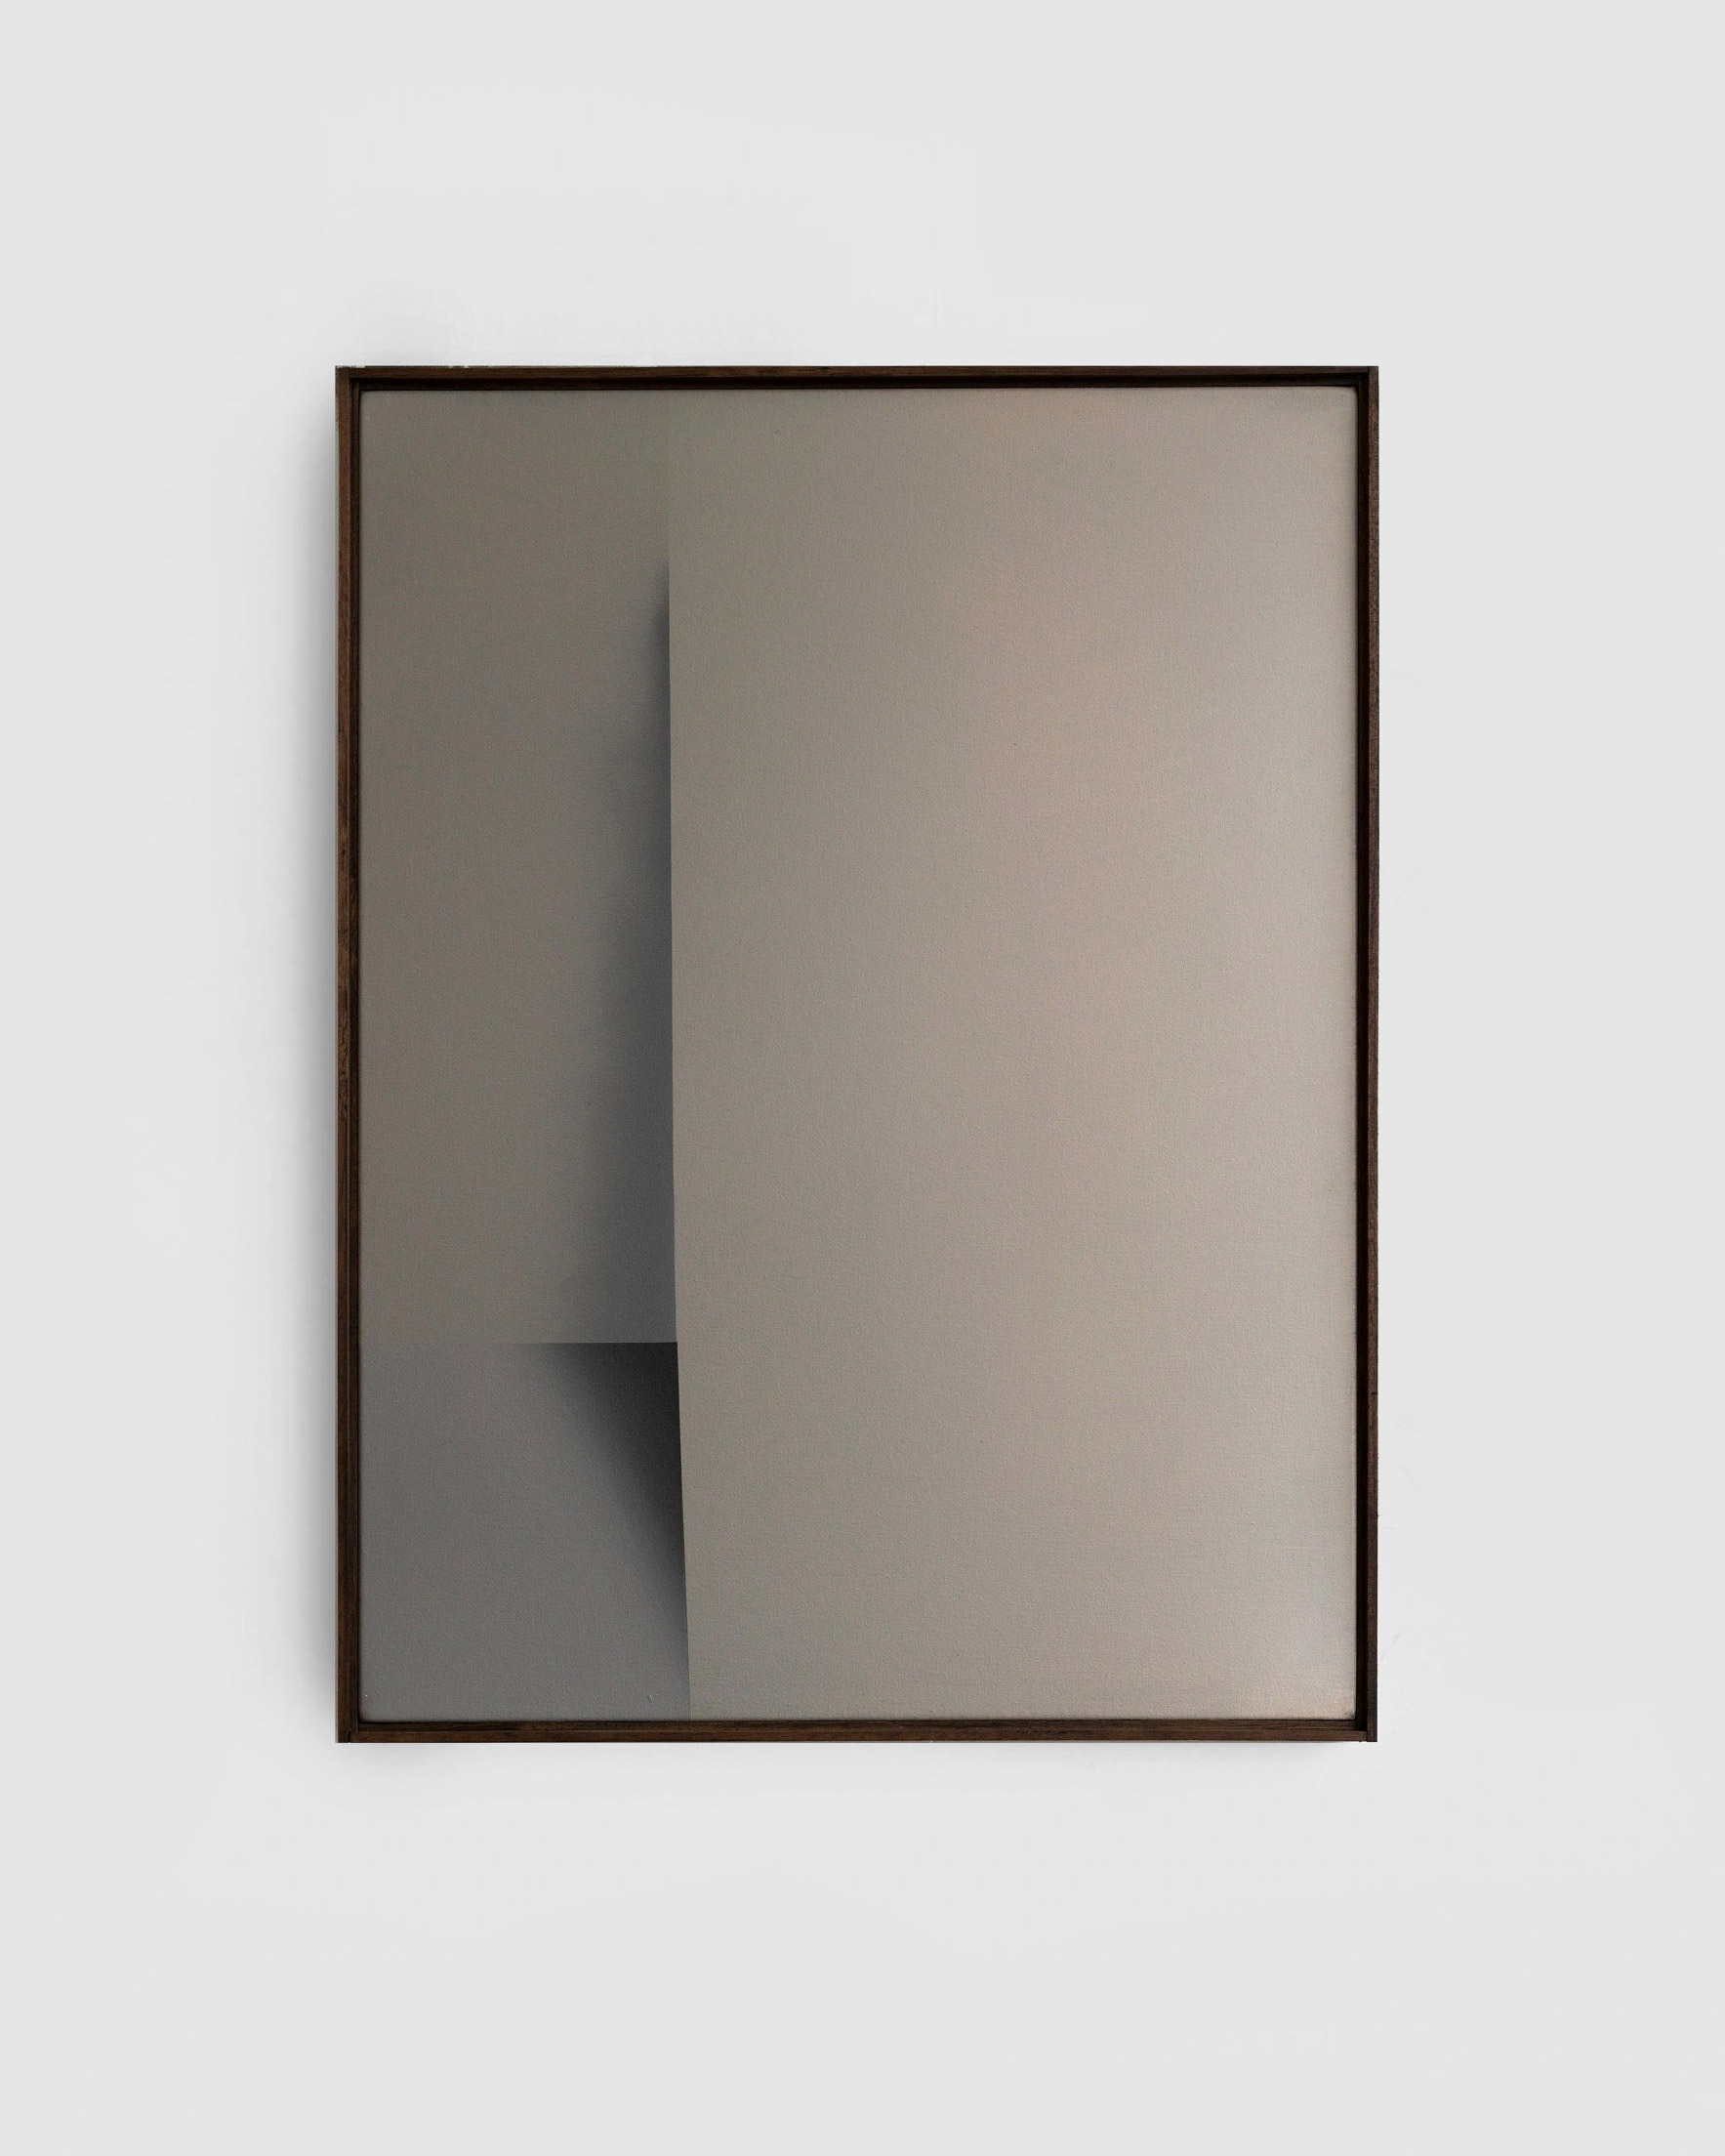 Tycjan Knut, light matters 20, acrylic on canvas 82cm x 62cm © The Artist, Image via Cadogan Gallery